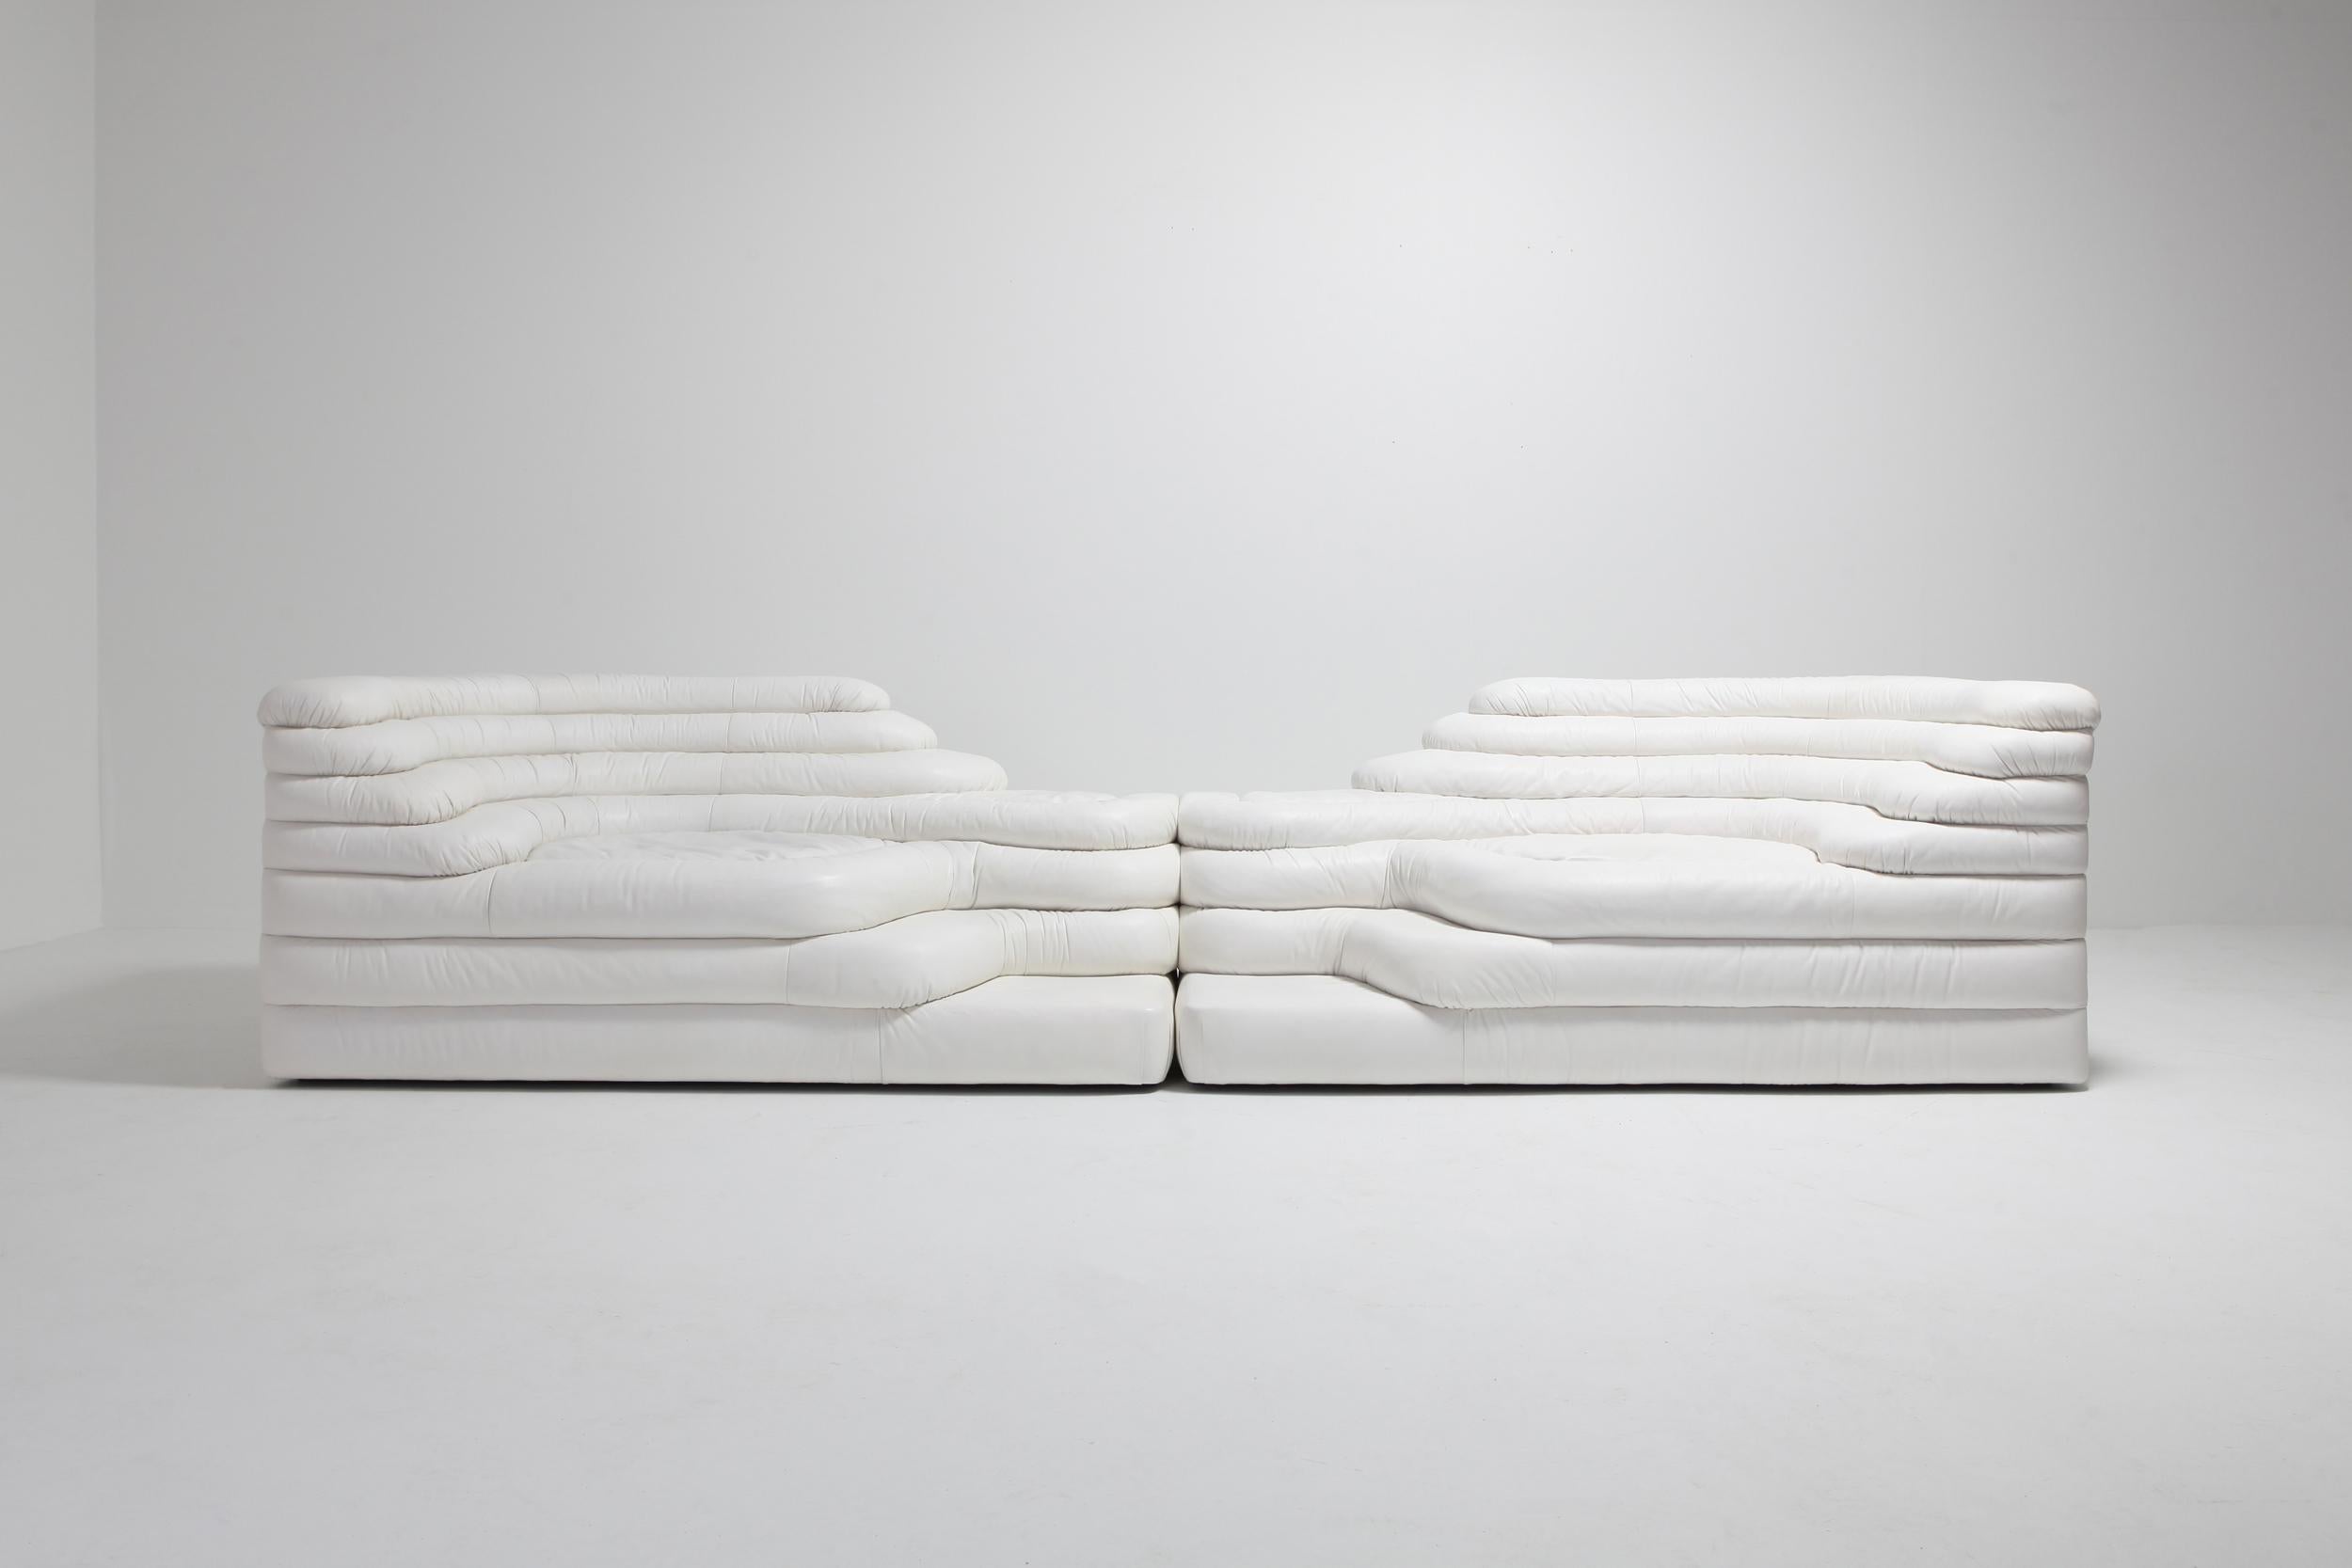 Late 20th Century De Sede 'Terrazza' Sofas DS 1025 in White Leather 1972 by U. Klug & Ueli Berger